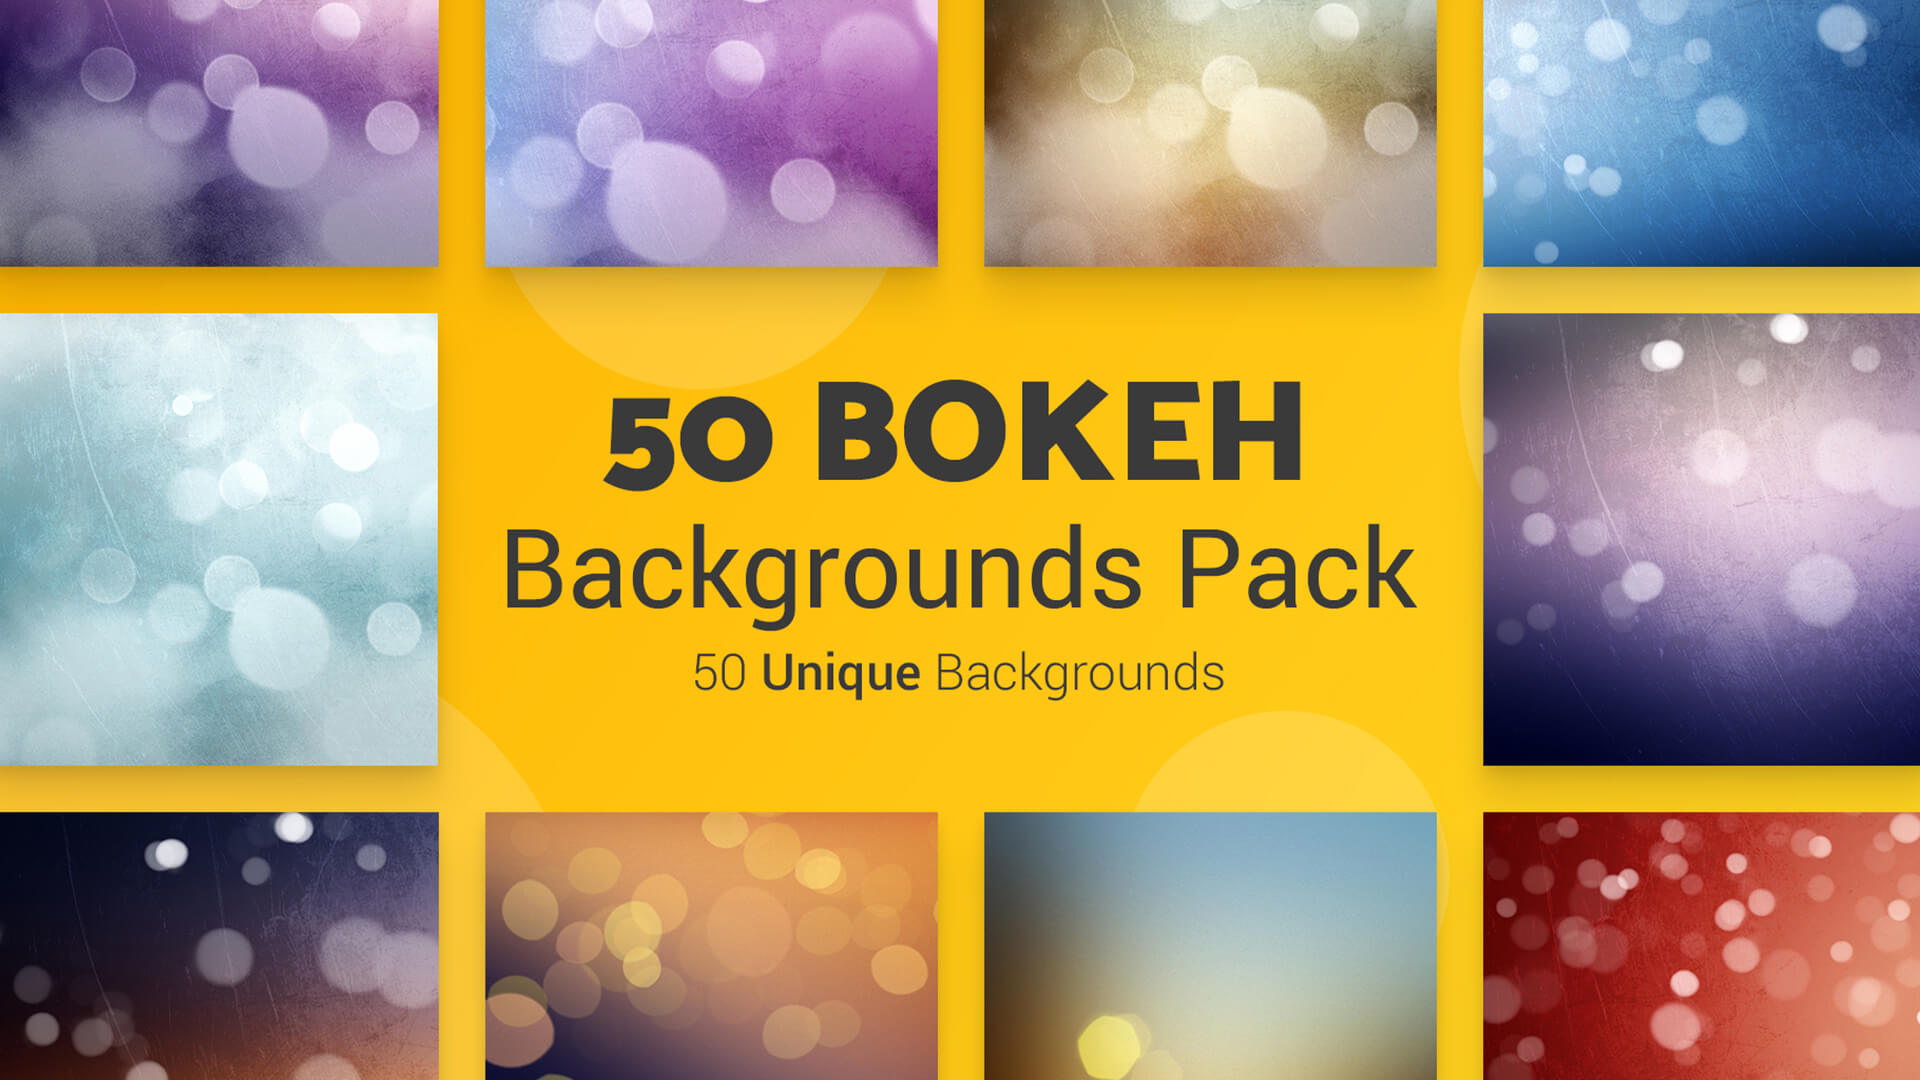 The Big Graphic Design Resources Bundle - 50 Bokeh BG Pack